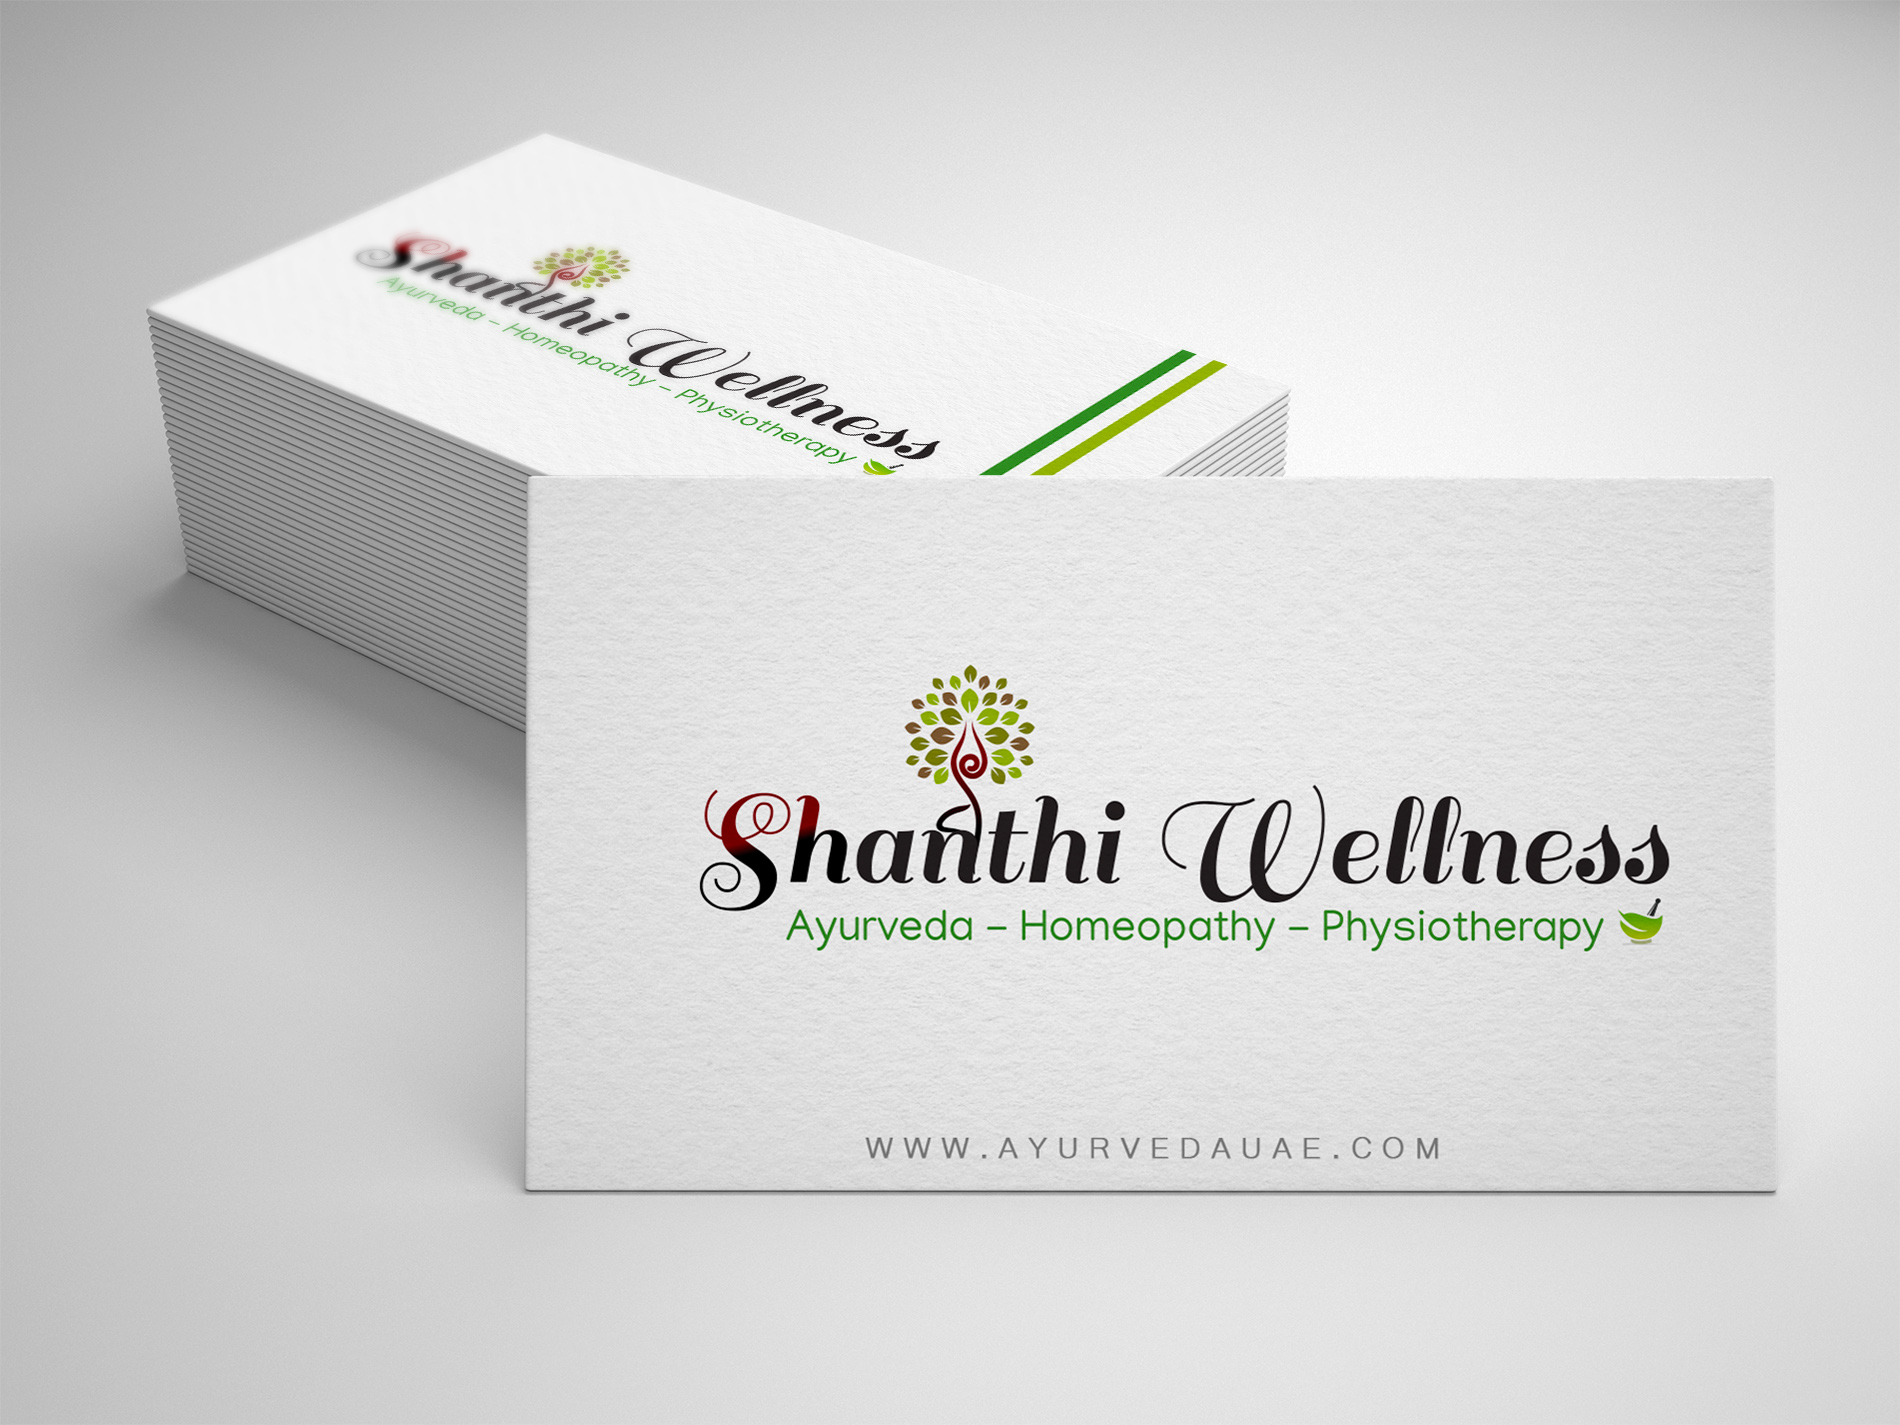 Shanthi Wellness Medical Center